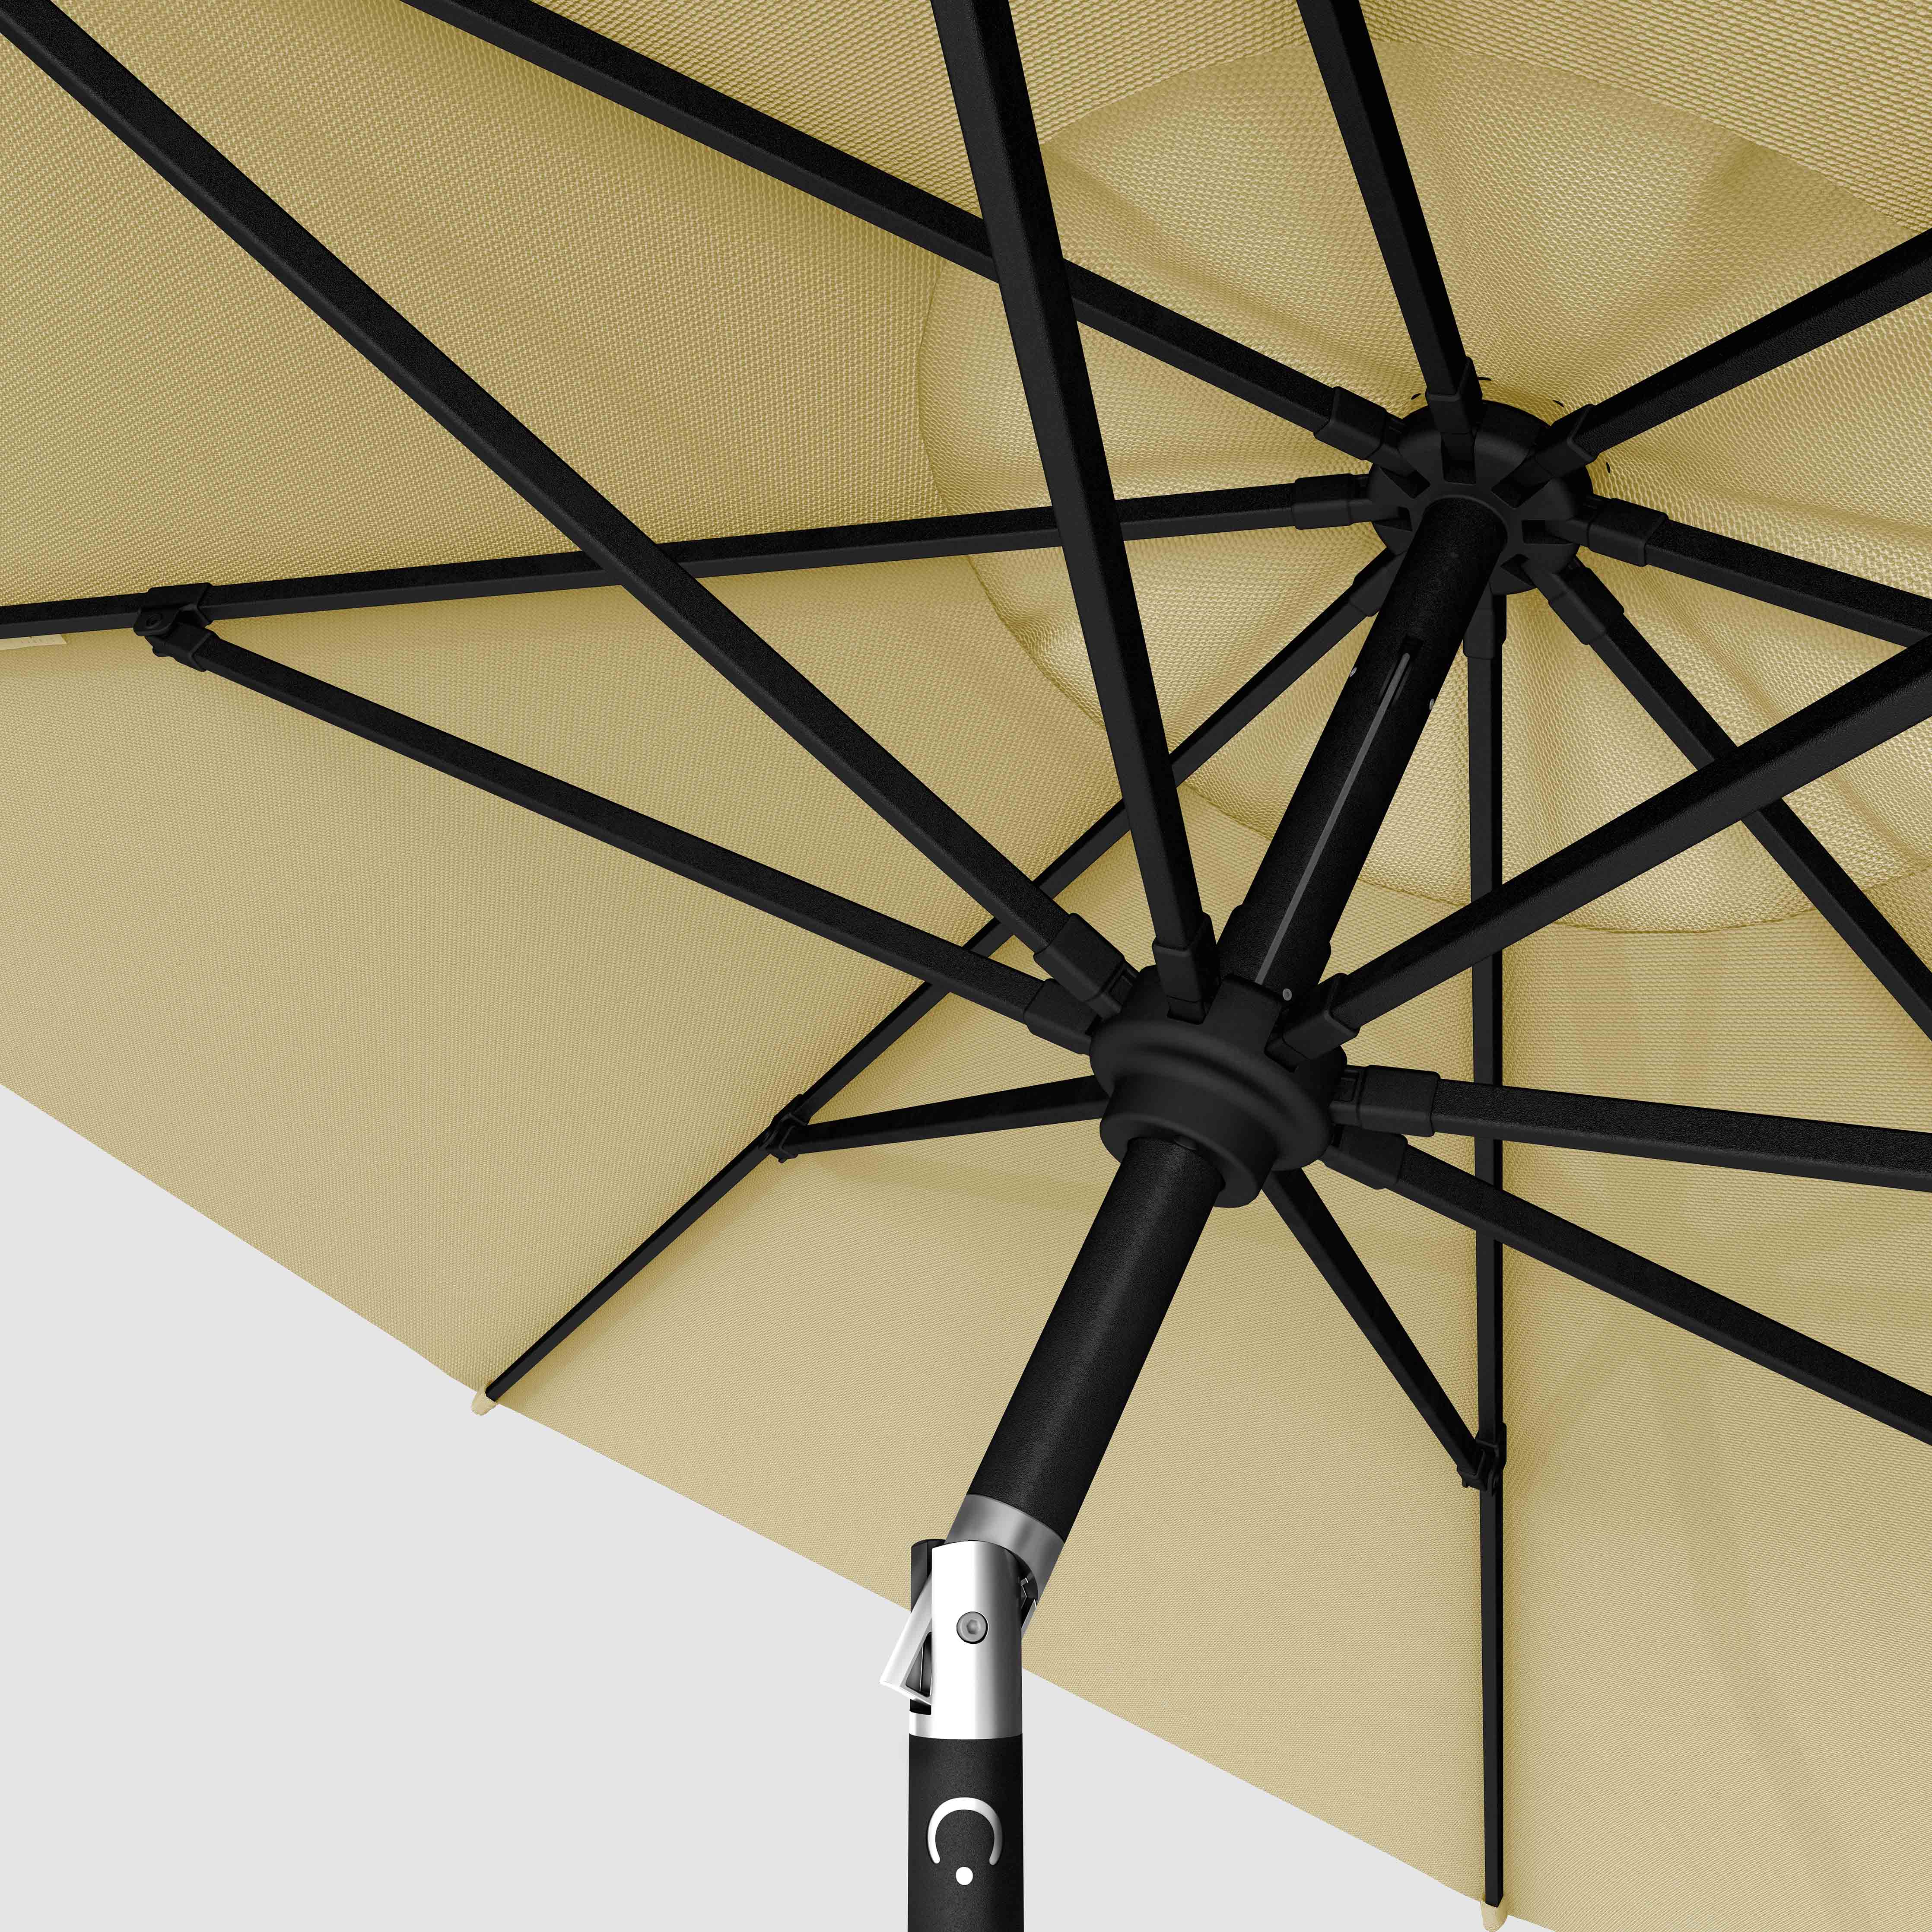 8ft-10ft Auto Tilt Sunbrella Patio Umbrella, Fiberglass Ribs, Aluminum  Pole, Wind Resistant